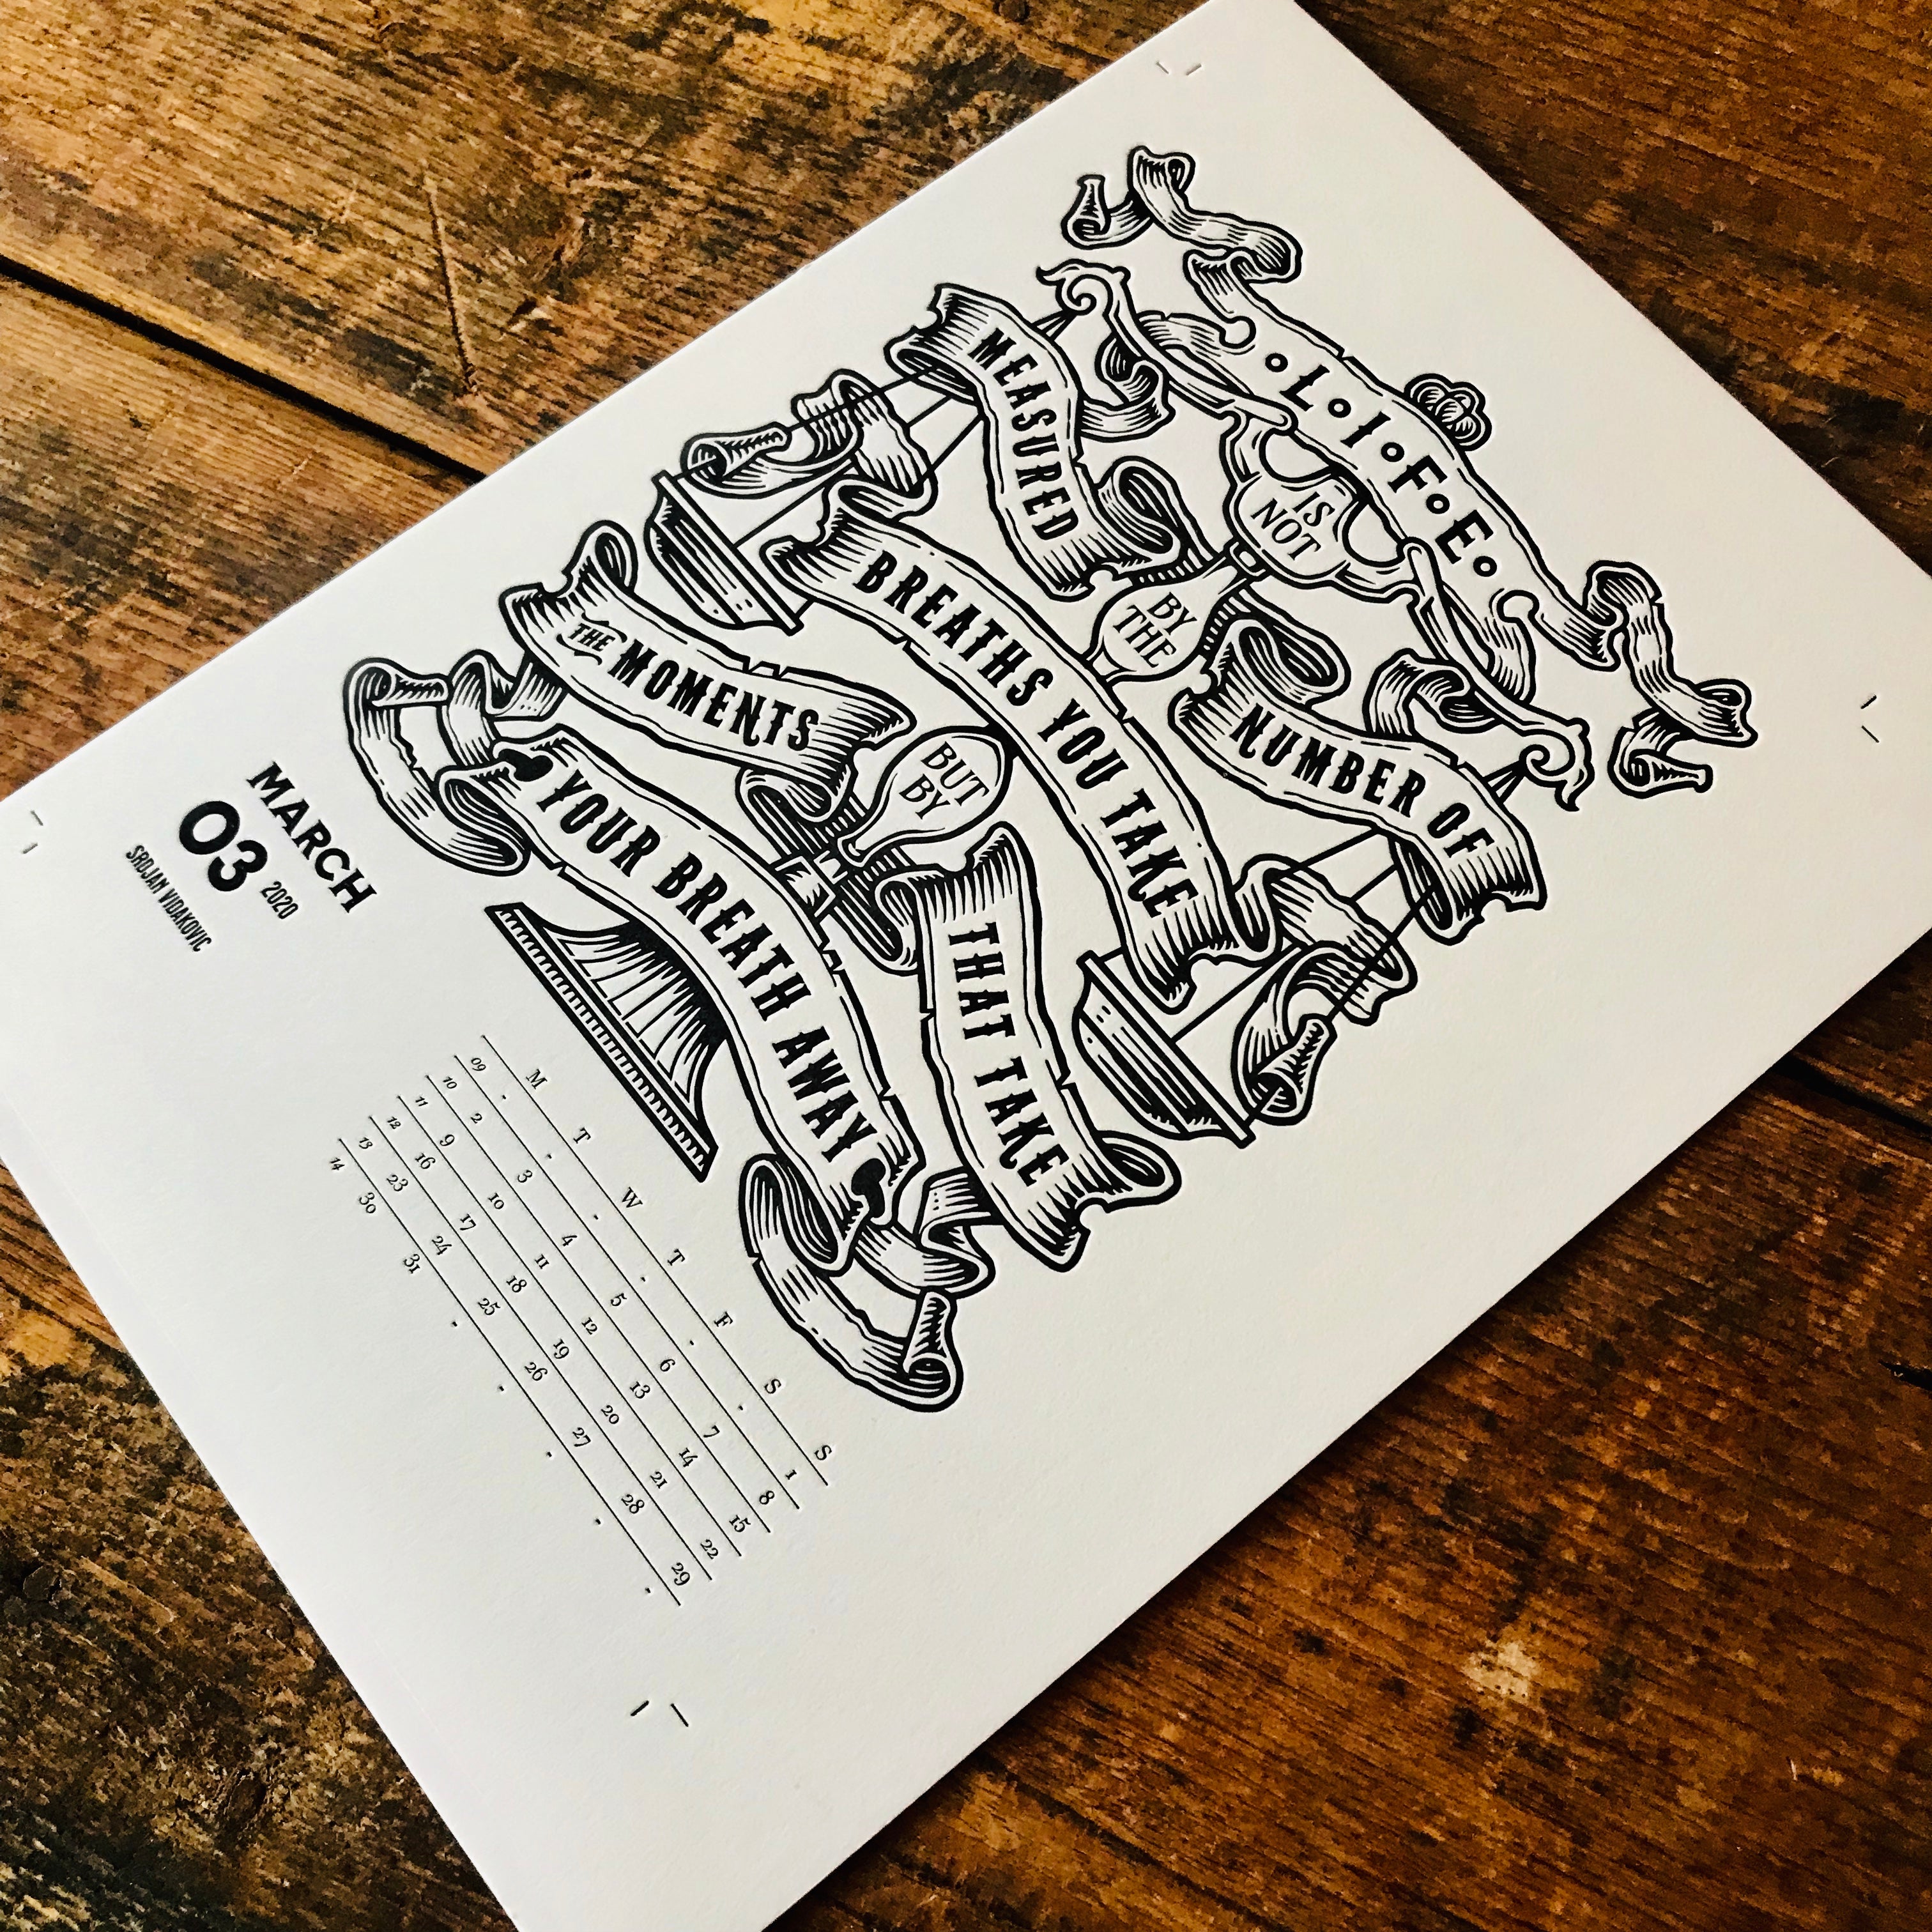 2020 letterpress calendar Artist's proof 03 - MR CUP